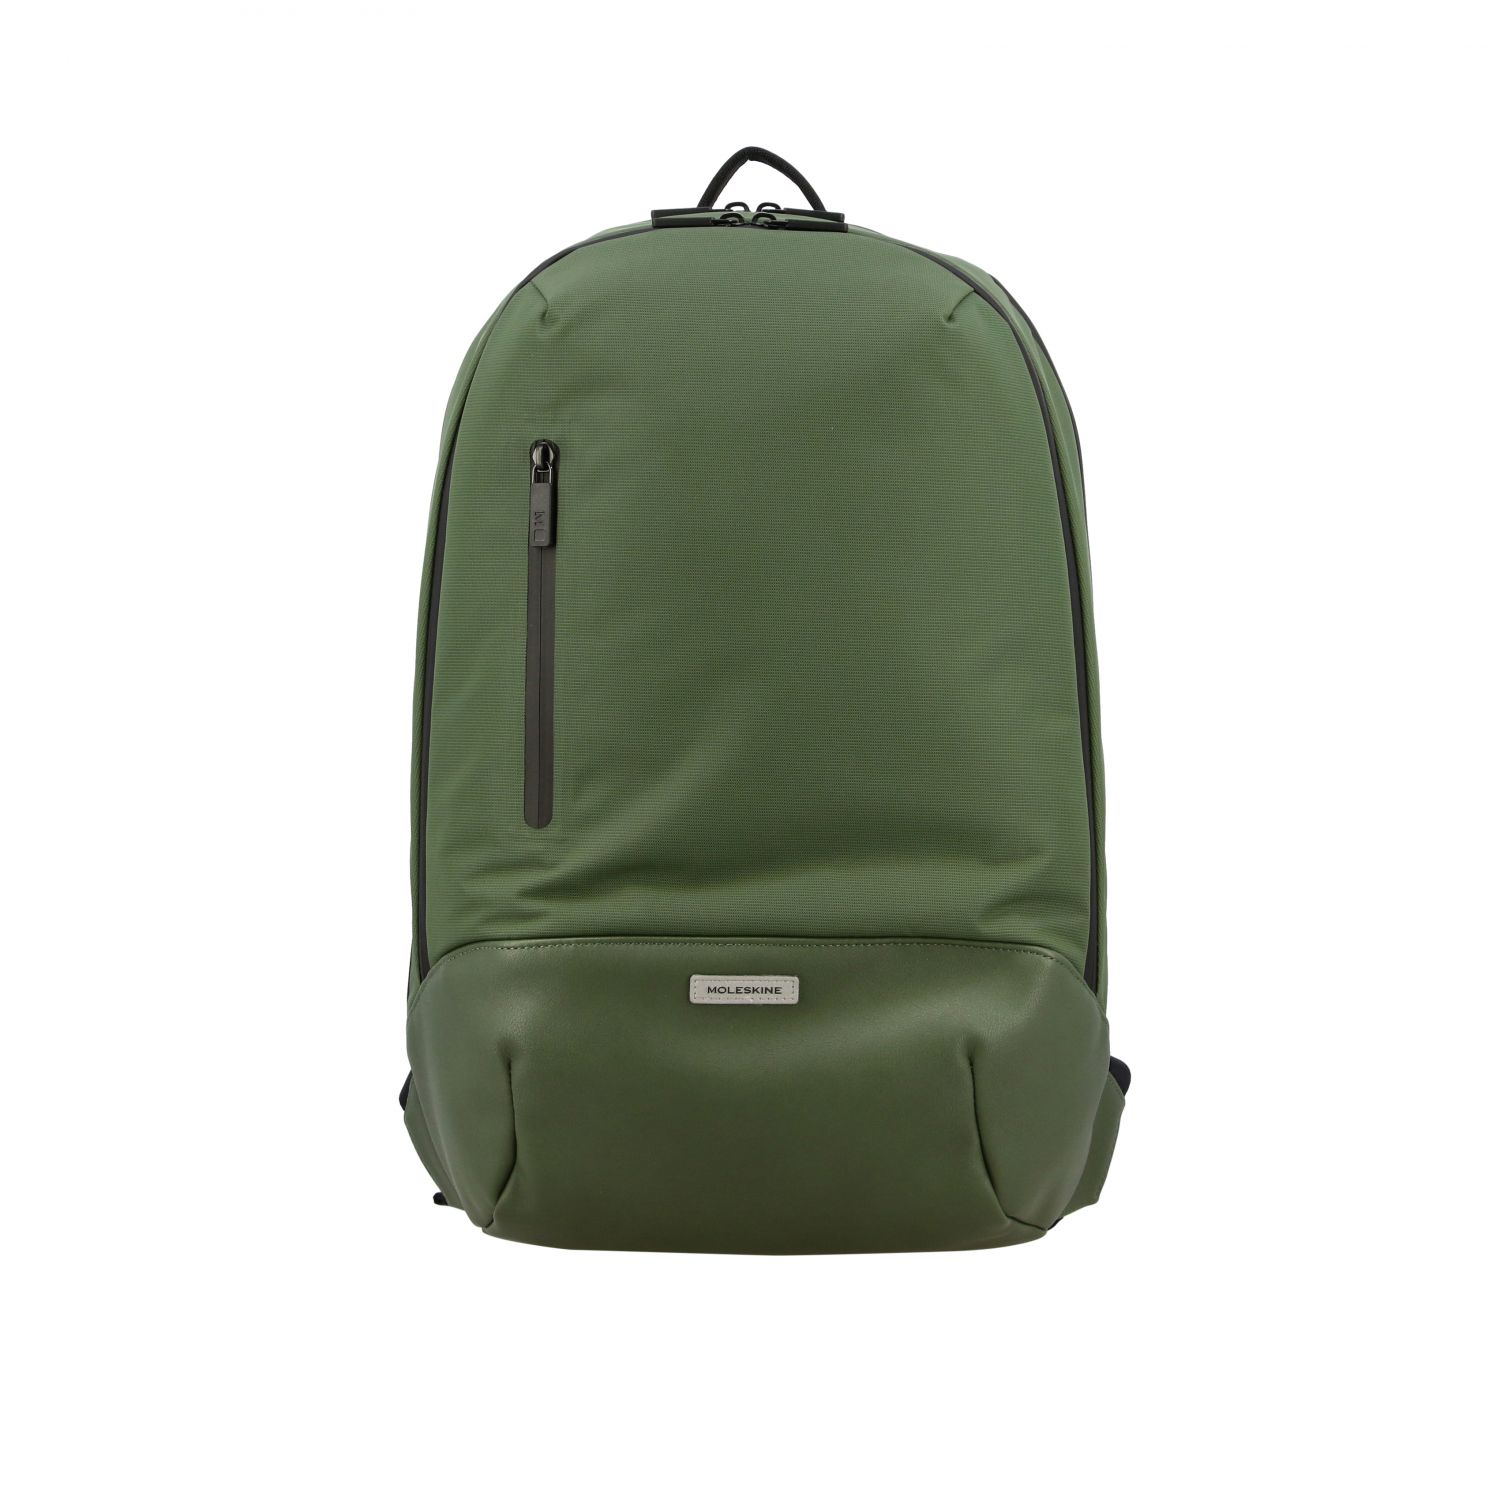 MOLESKINE: Backpack men - Green | Backpack Moleskine 8053853600998 ...